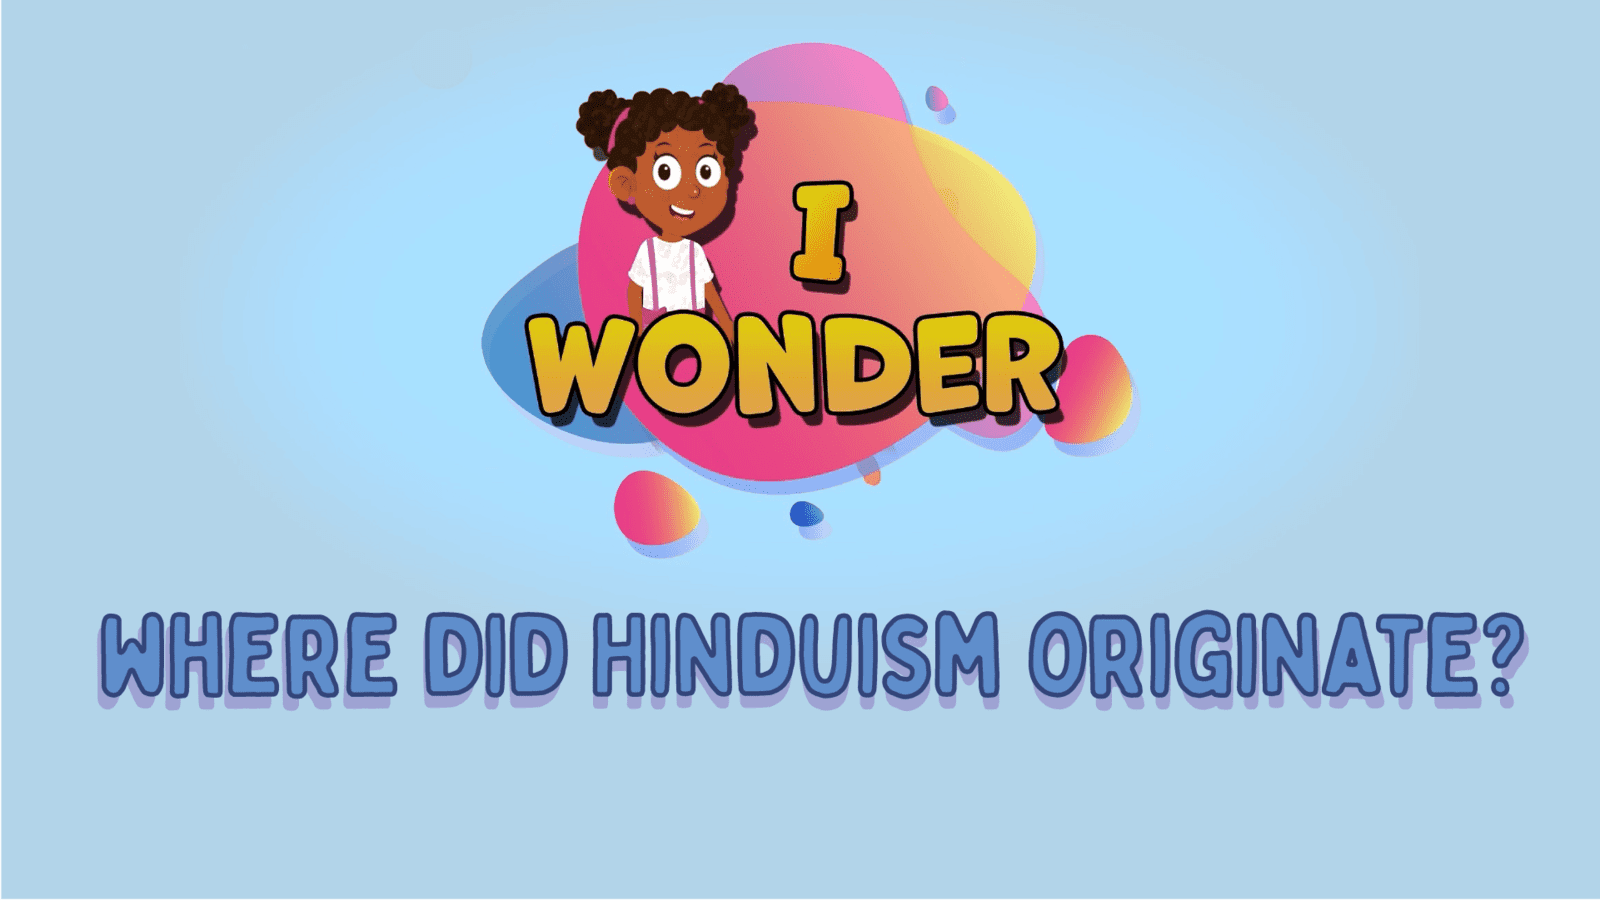 Where Did Hinduism Originate?